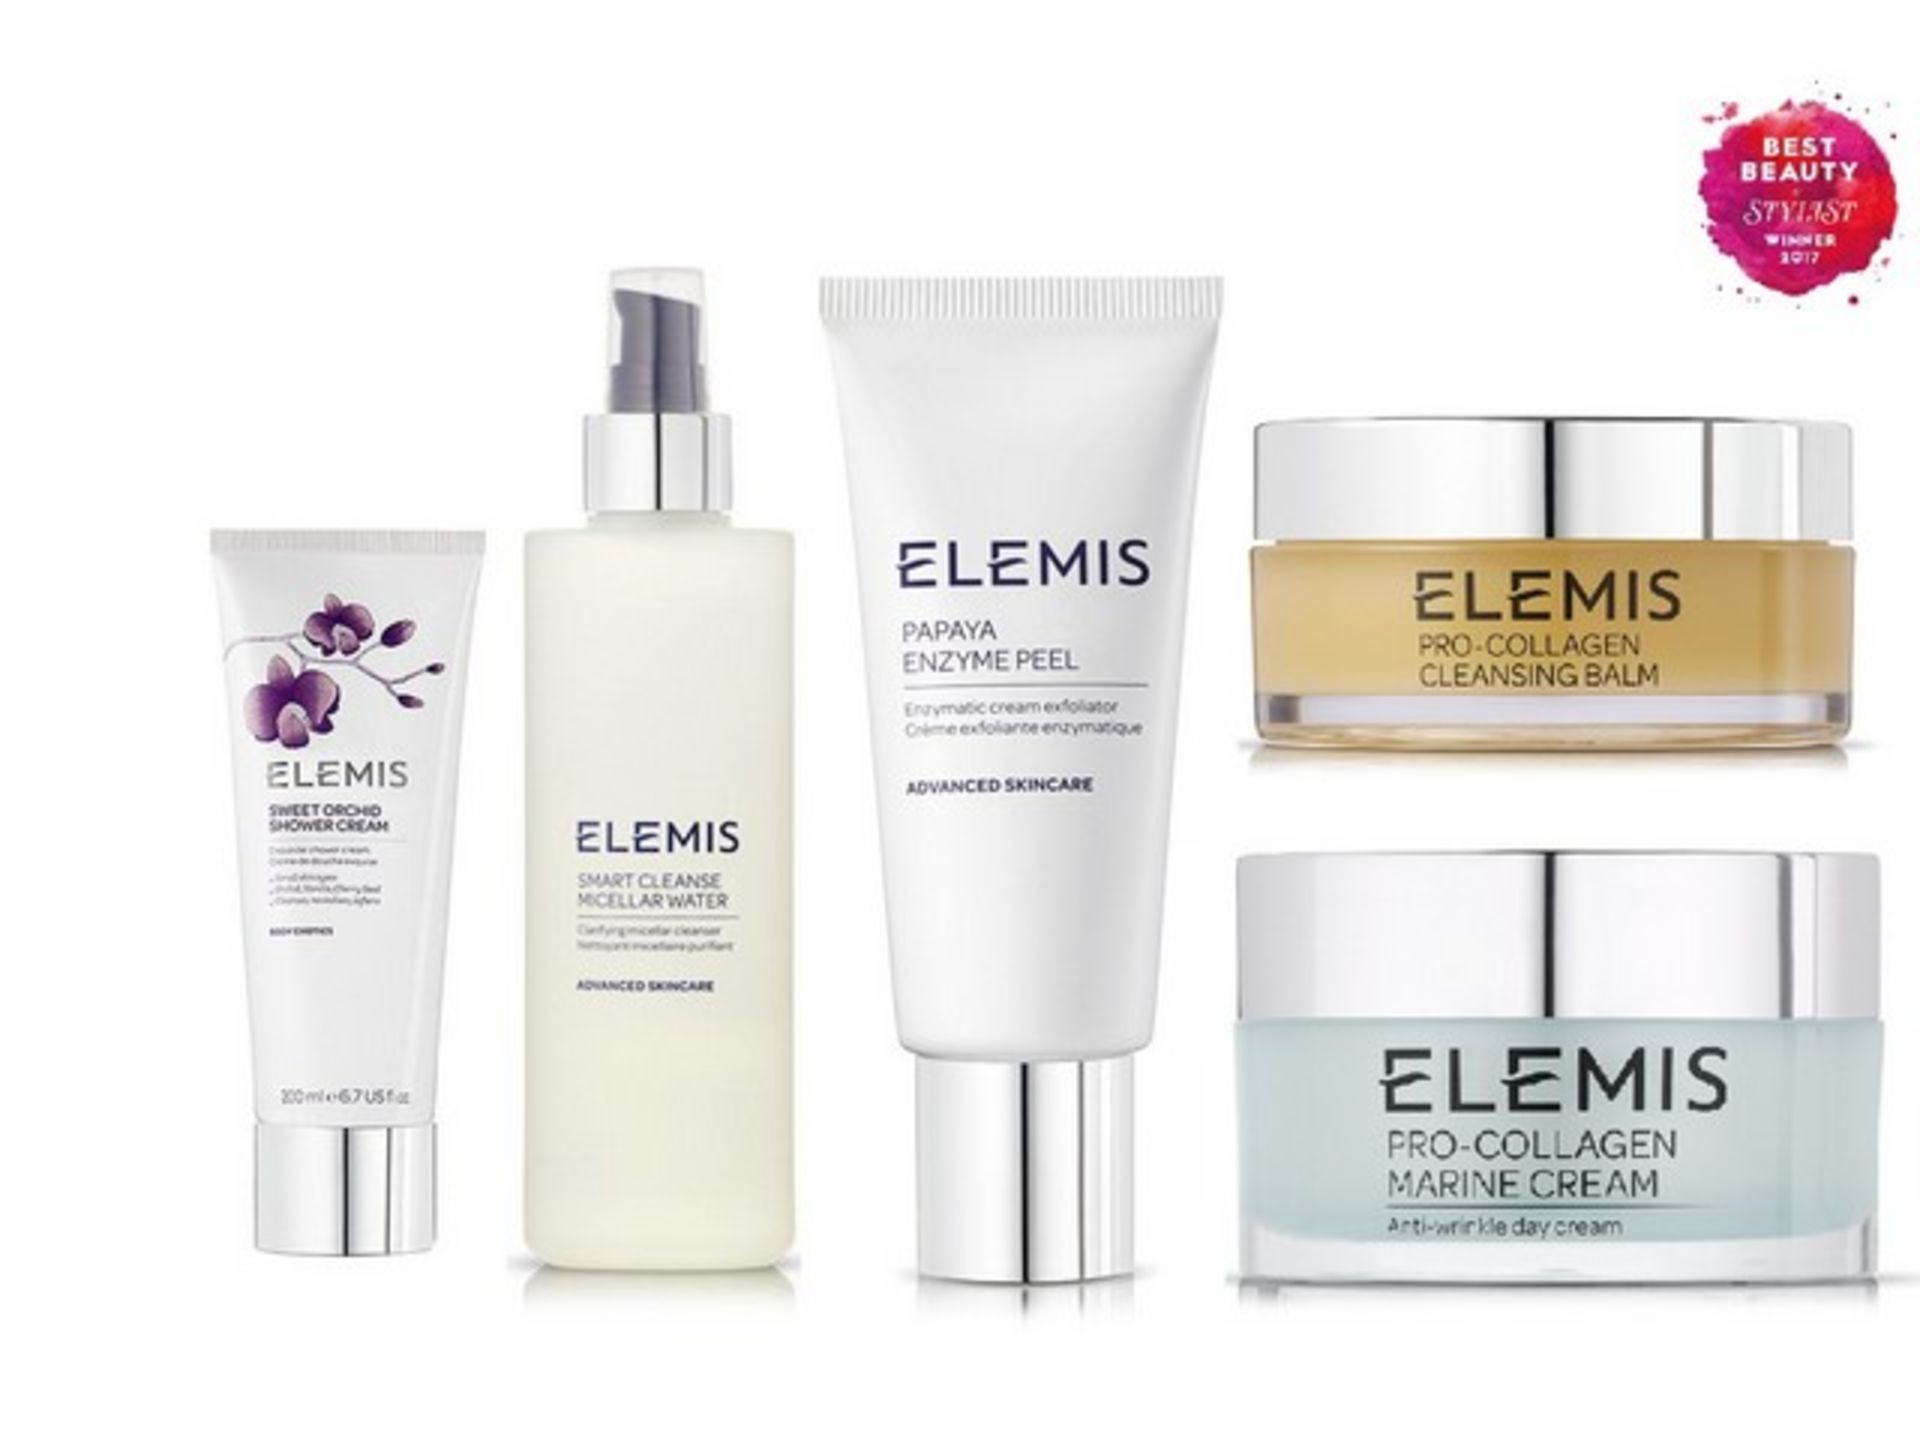 Grade A Elemis Gift Set Including Make Up Bag-Sweet Orchid Shoer Cream-Collagen Cleansing Balm-